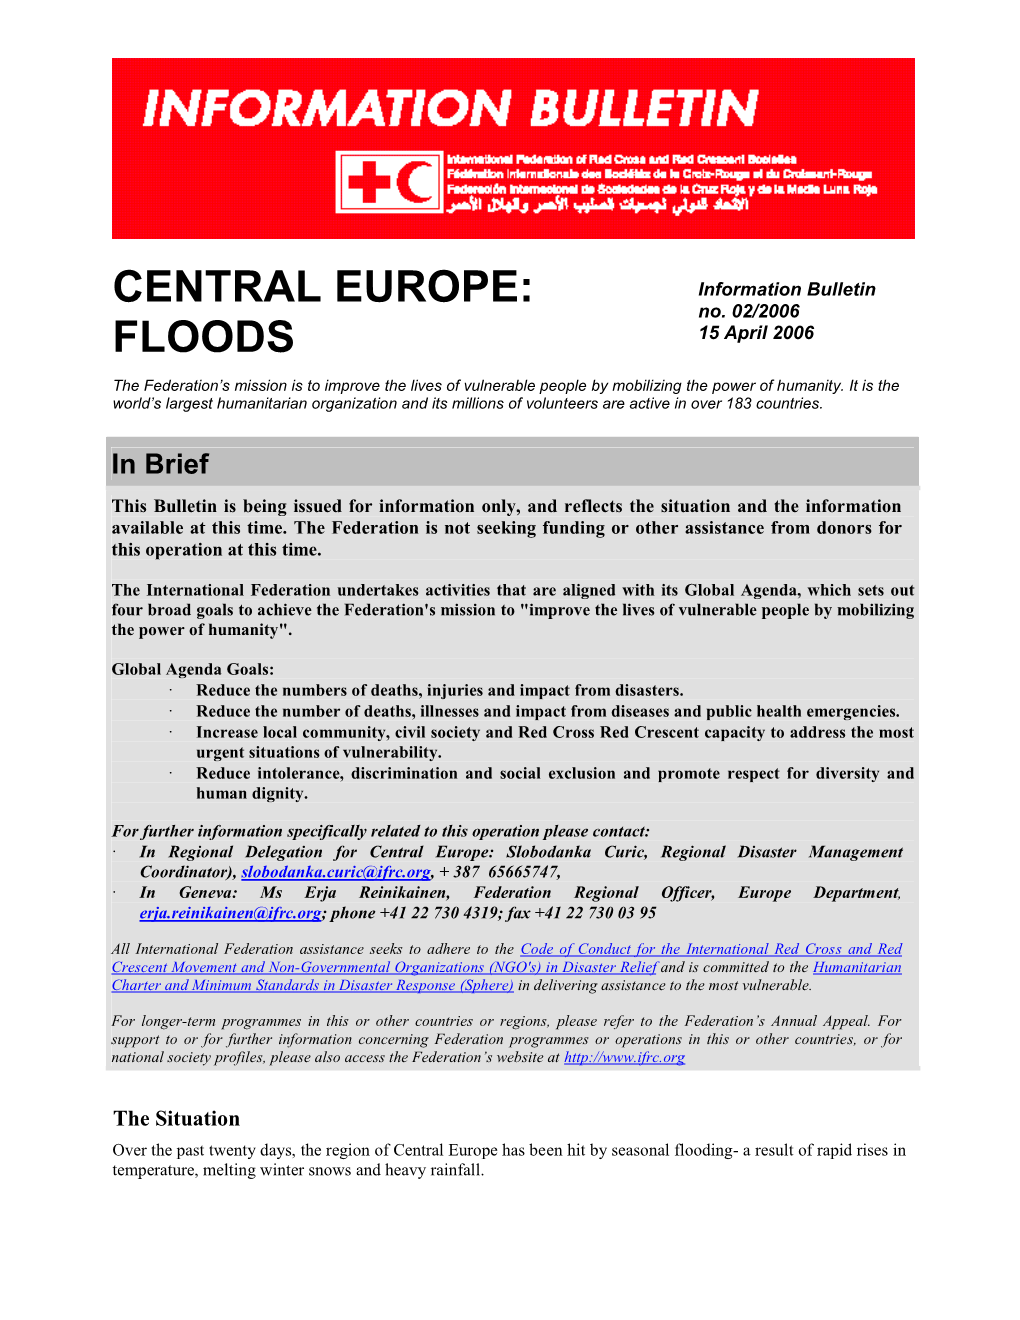 Central Europe Floods Information Bulletin 2